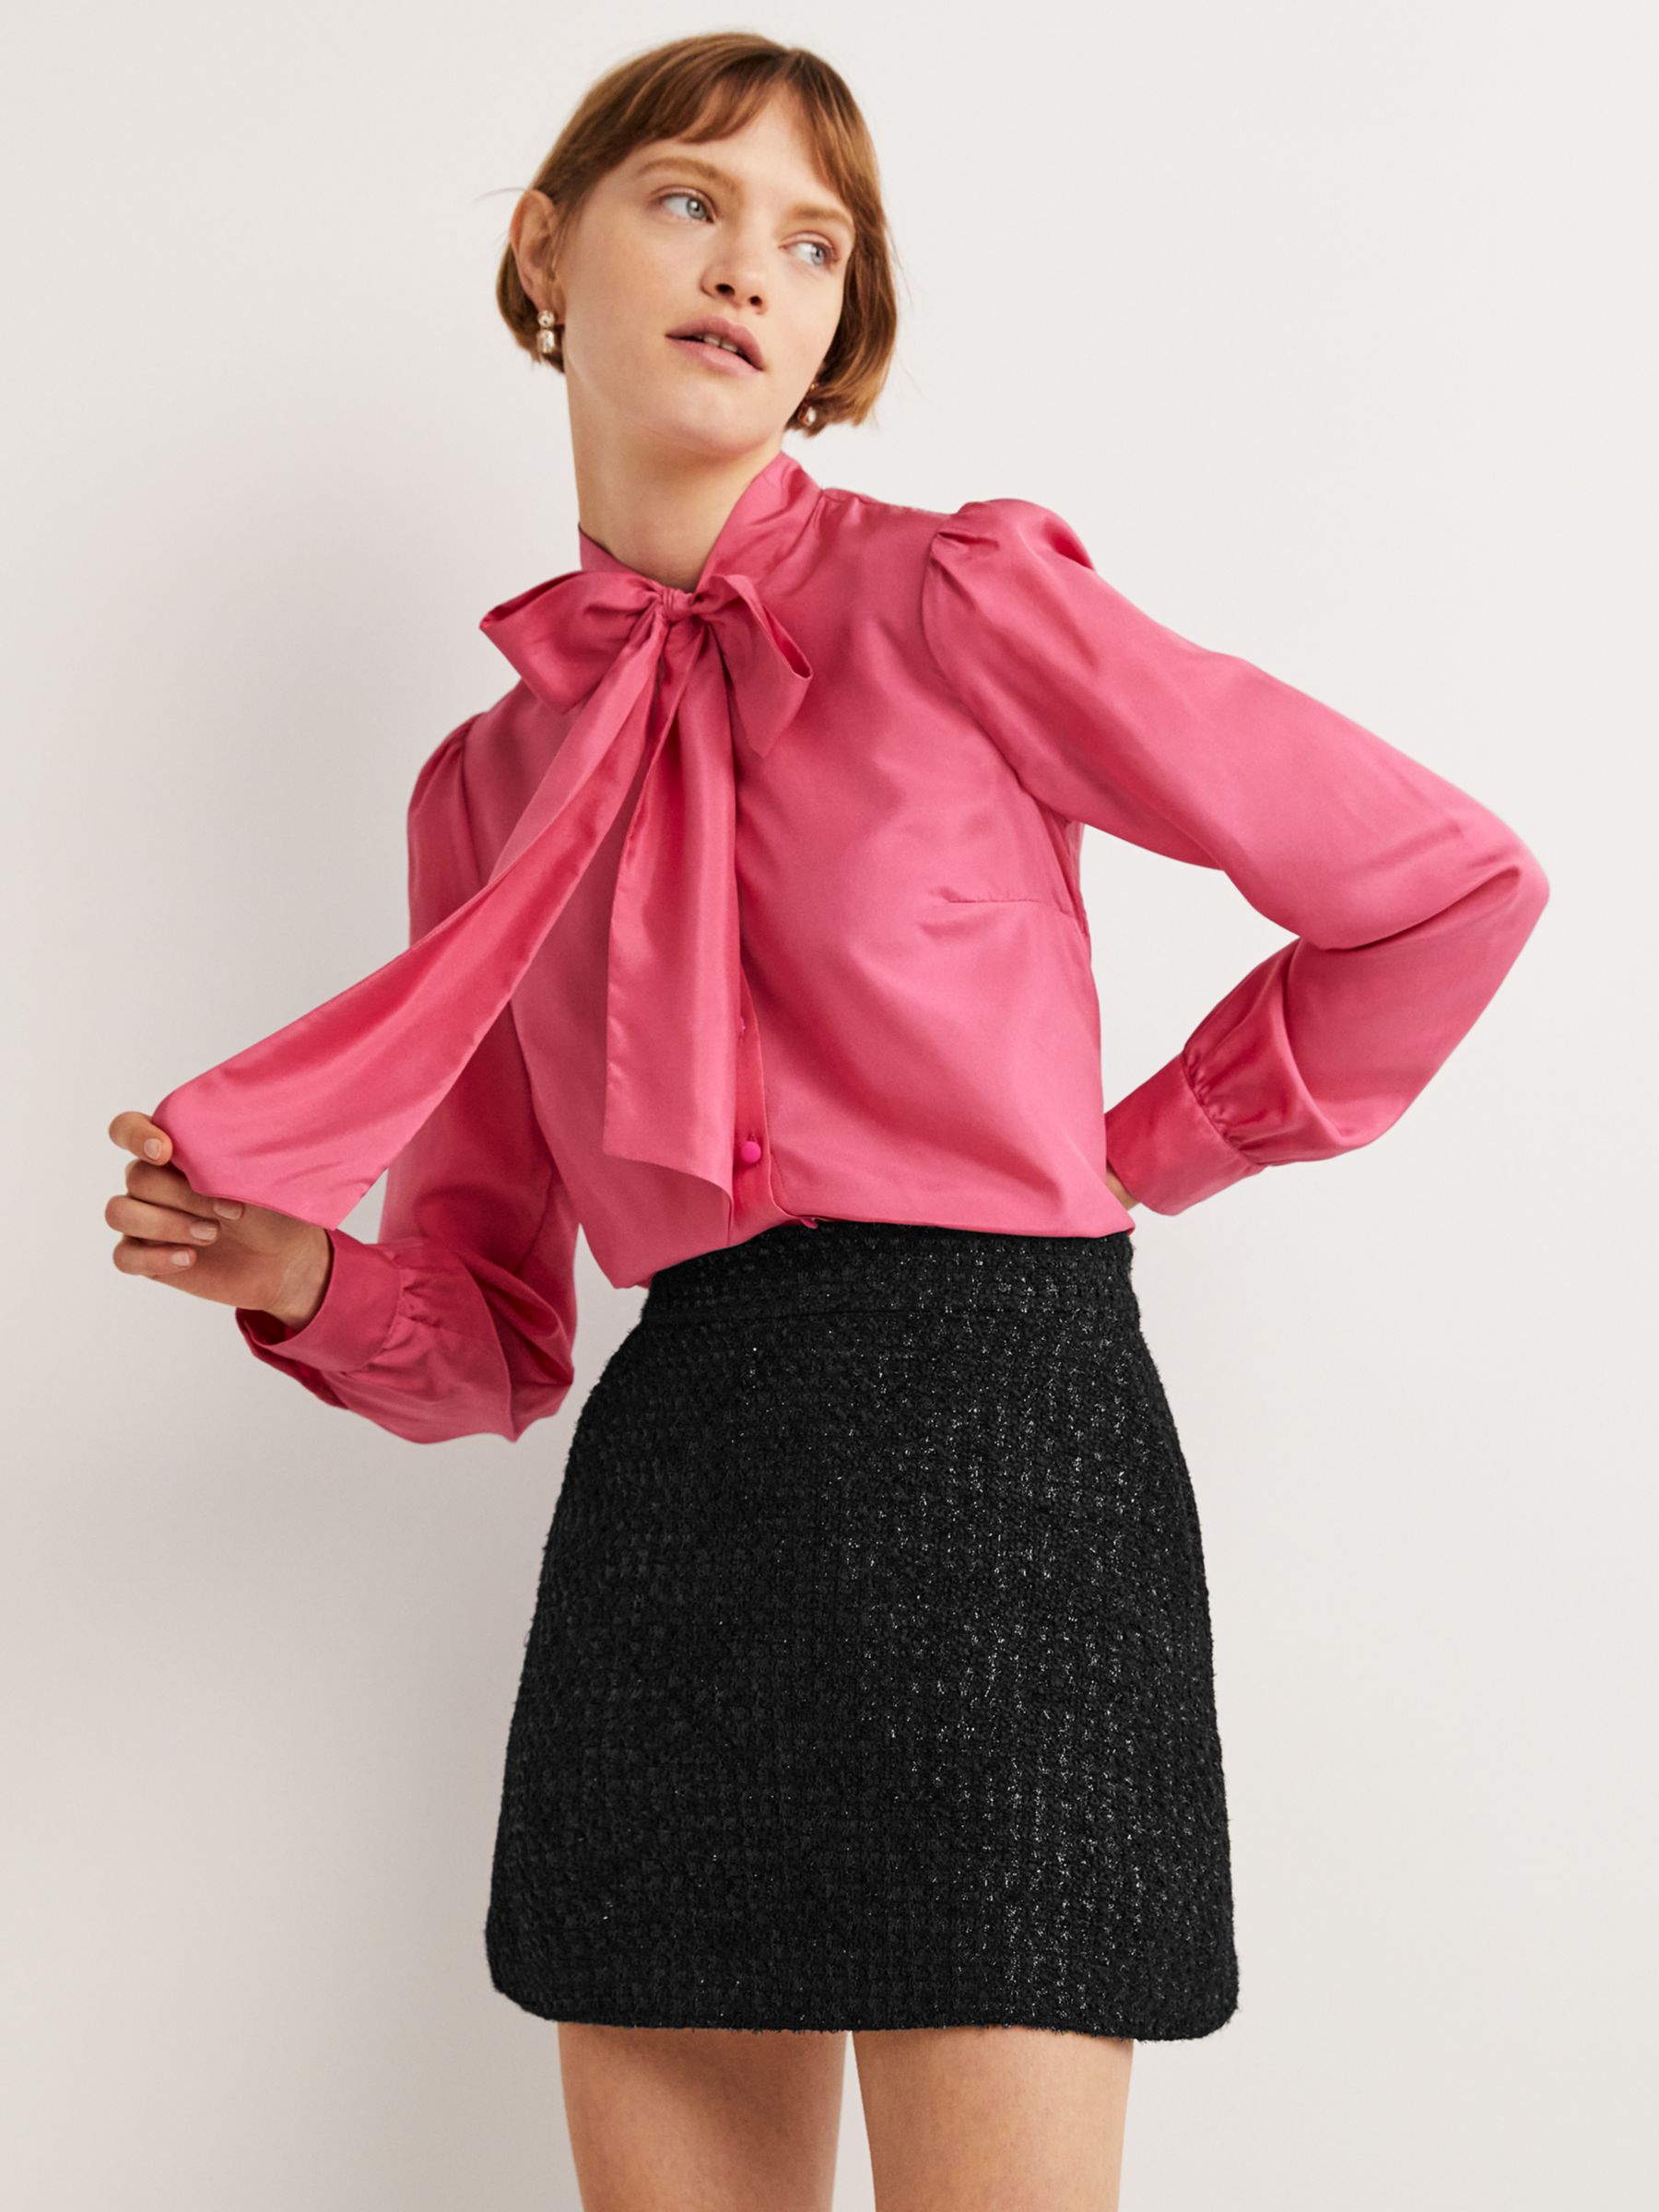 Boden Shimmery Metallic Tweed Mini Skirt, Black at John Lewis & Partners